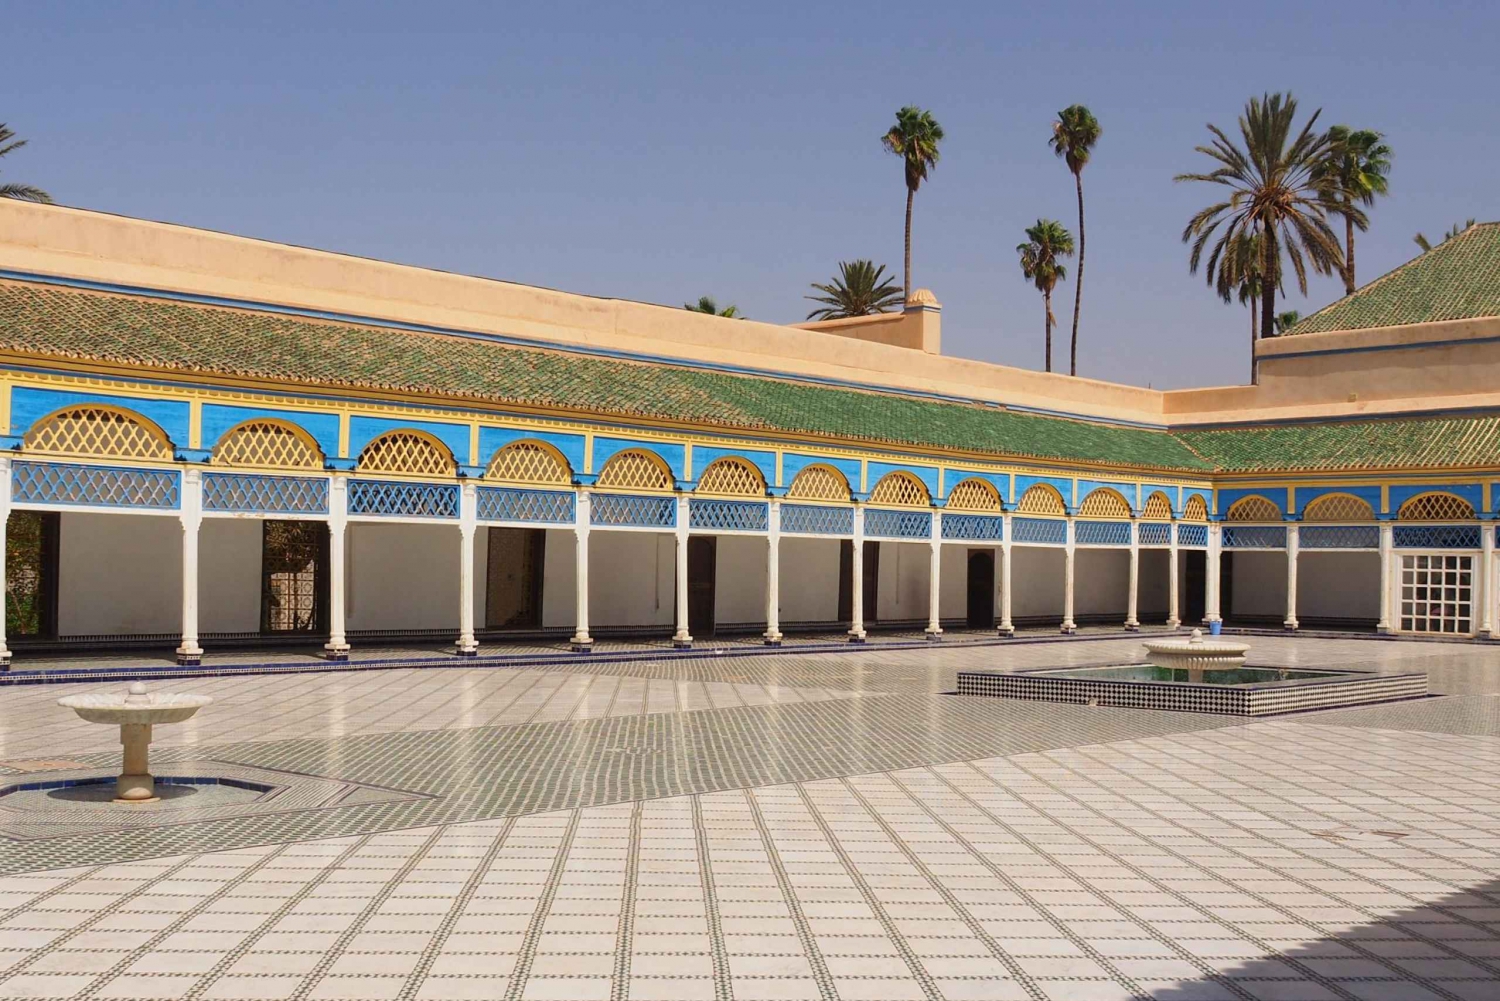 Marrakech: Bahia Palace Guided Tour